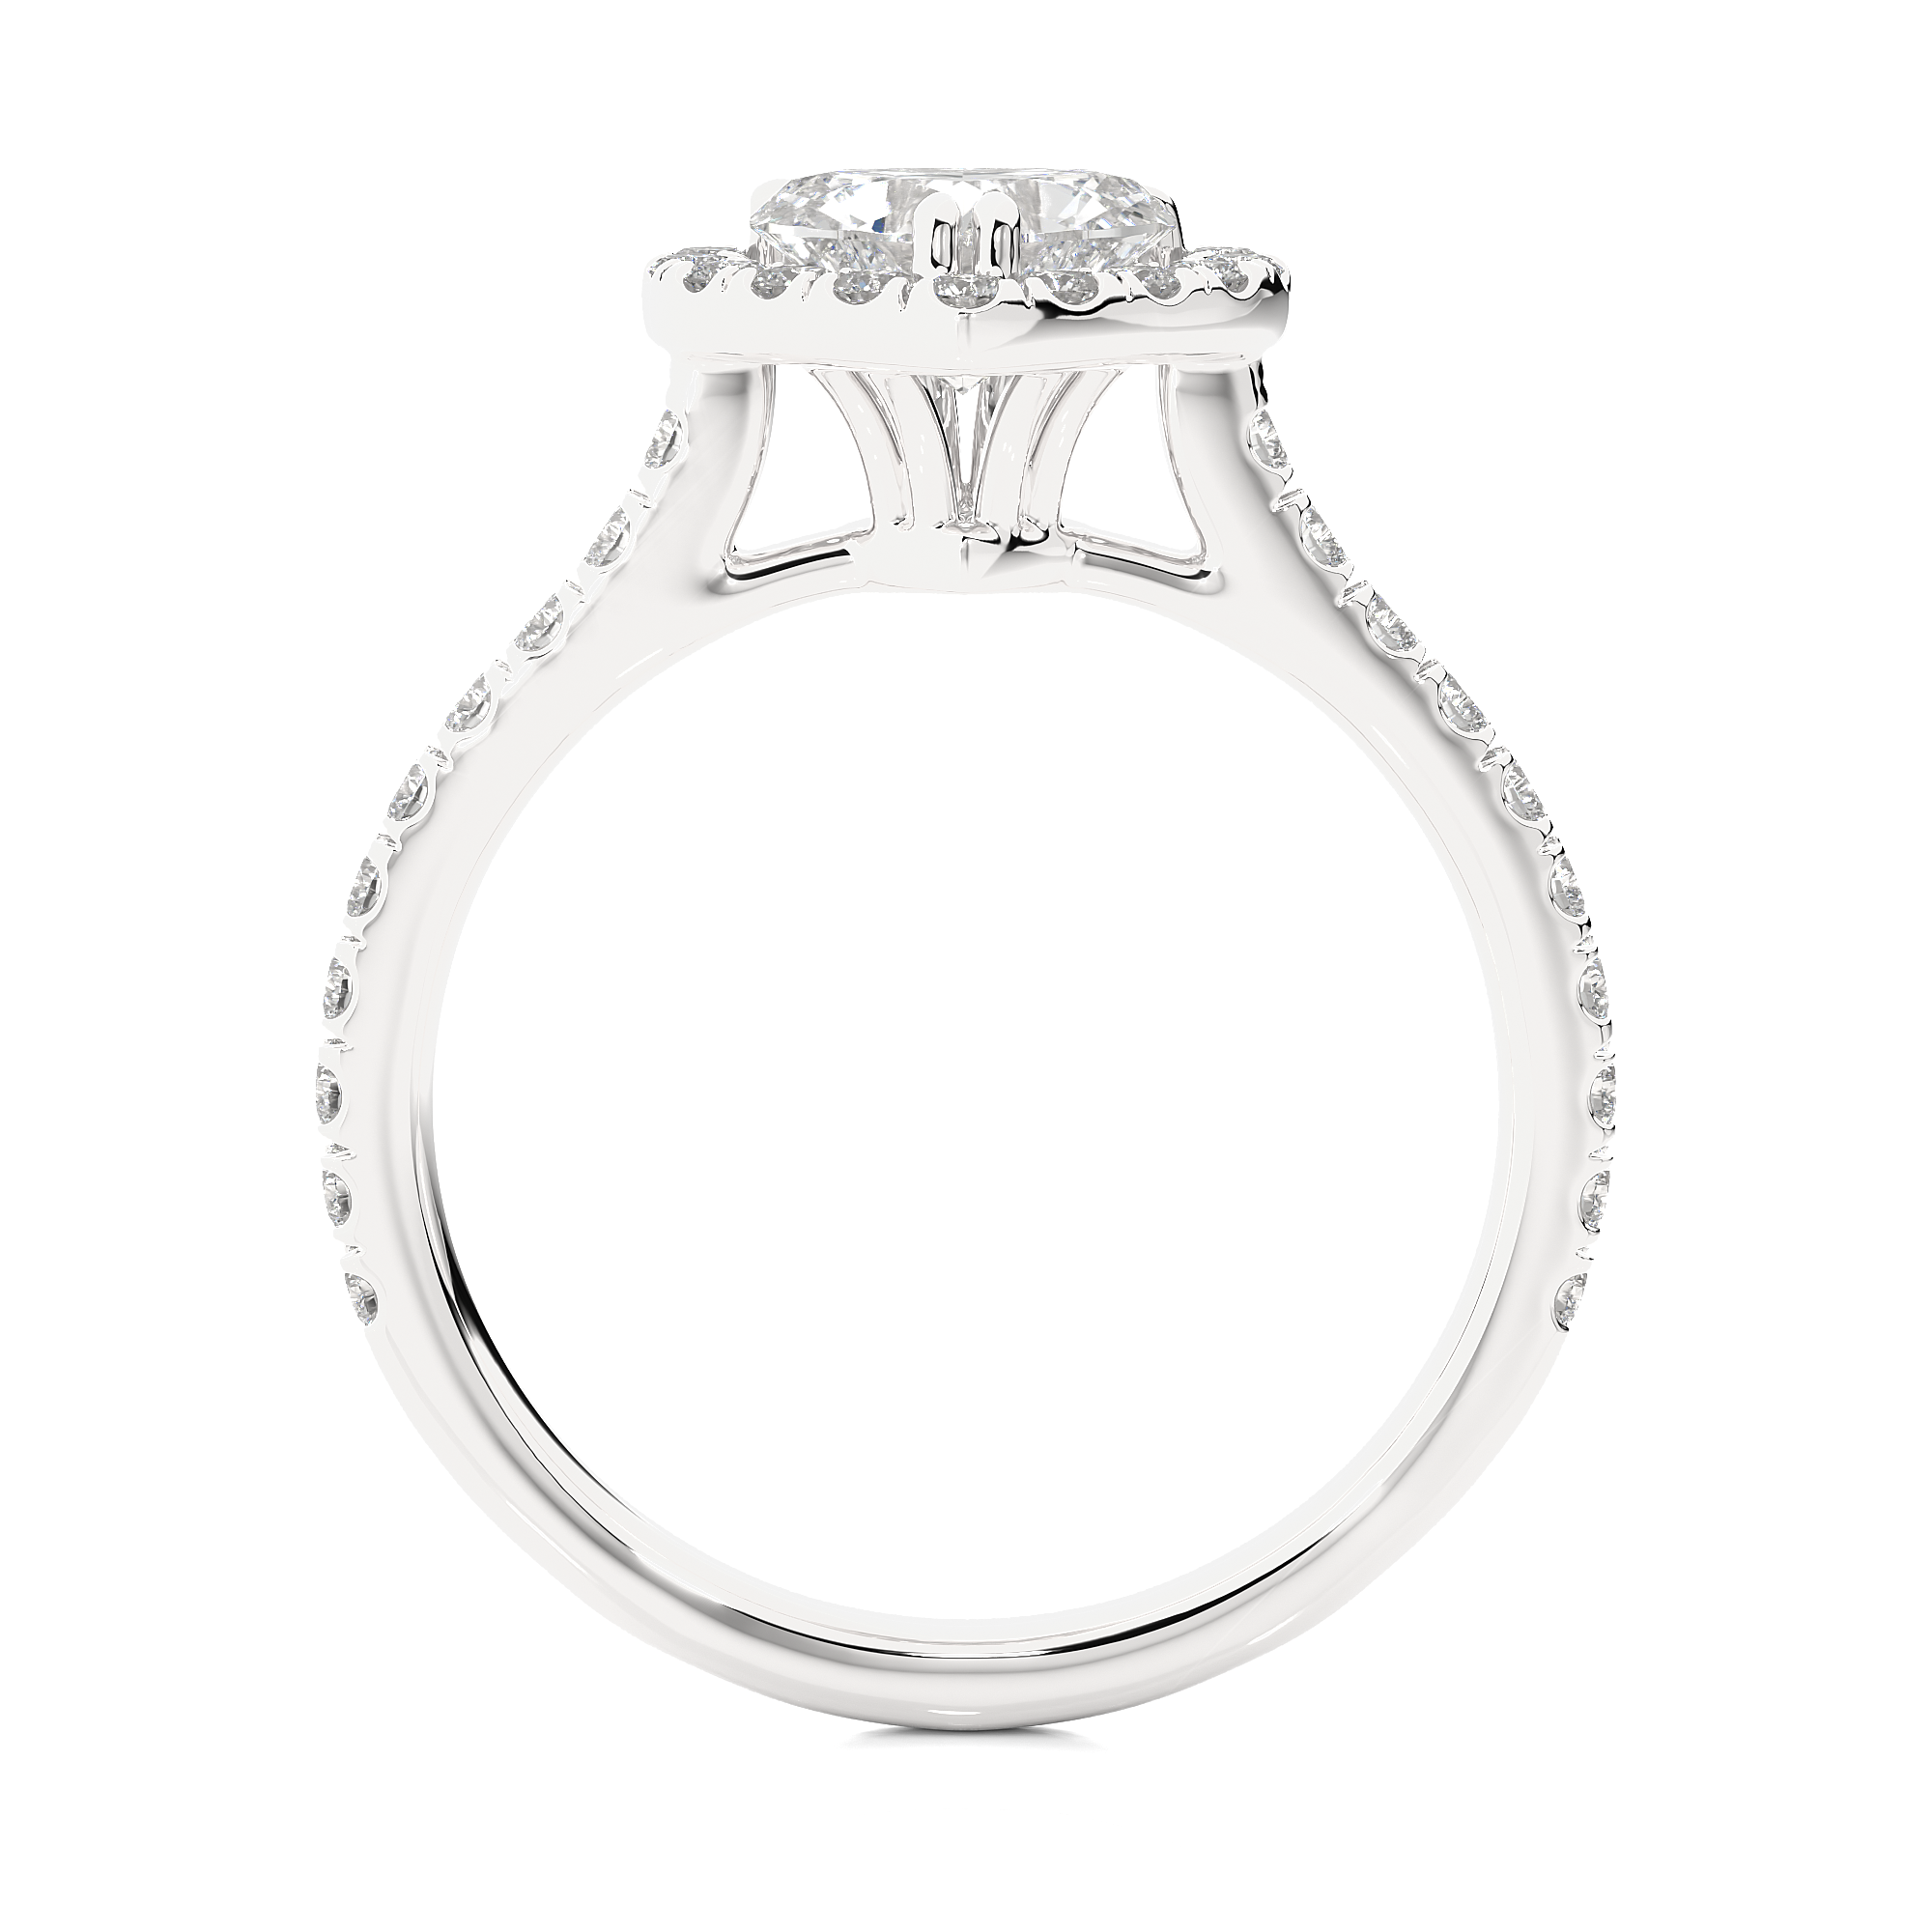 1.33Ct Heart Shaped Solitaire Diamond Ring in White Gold - Blu Diamonds